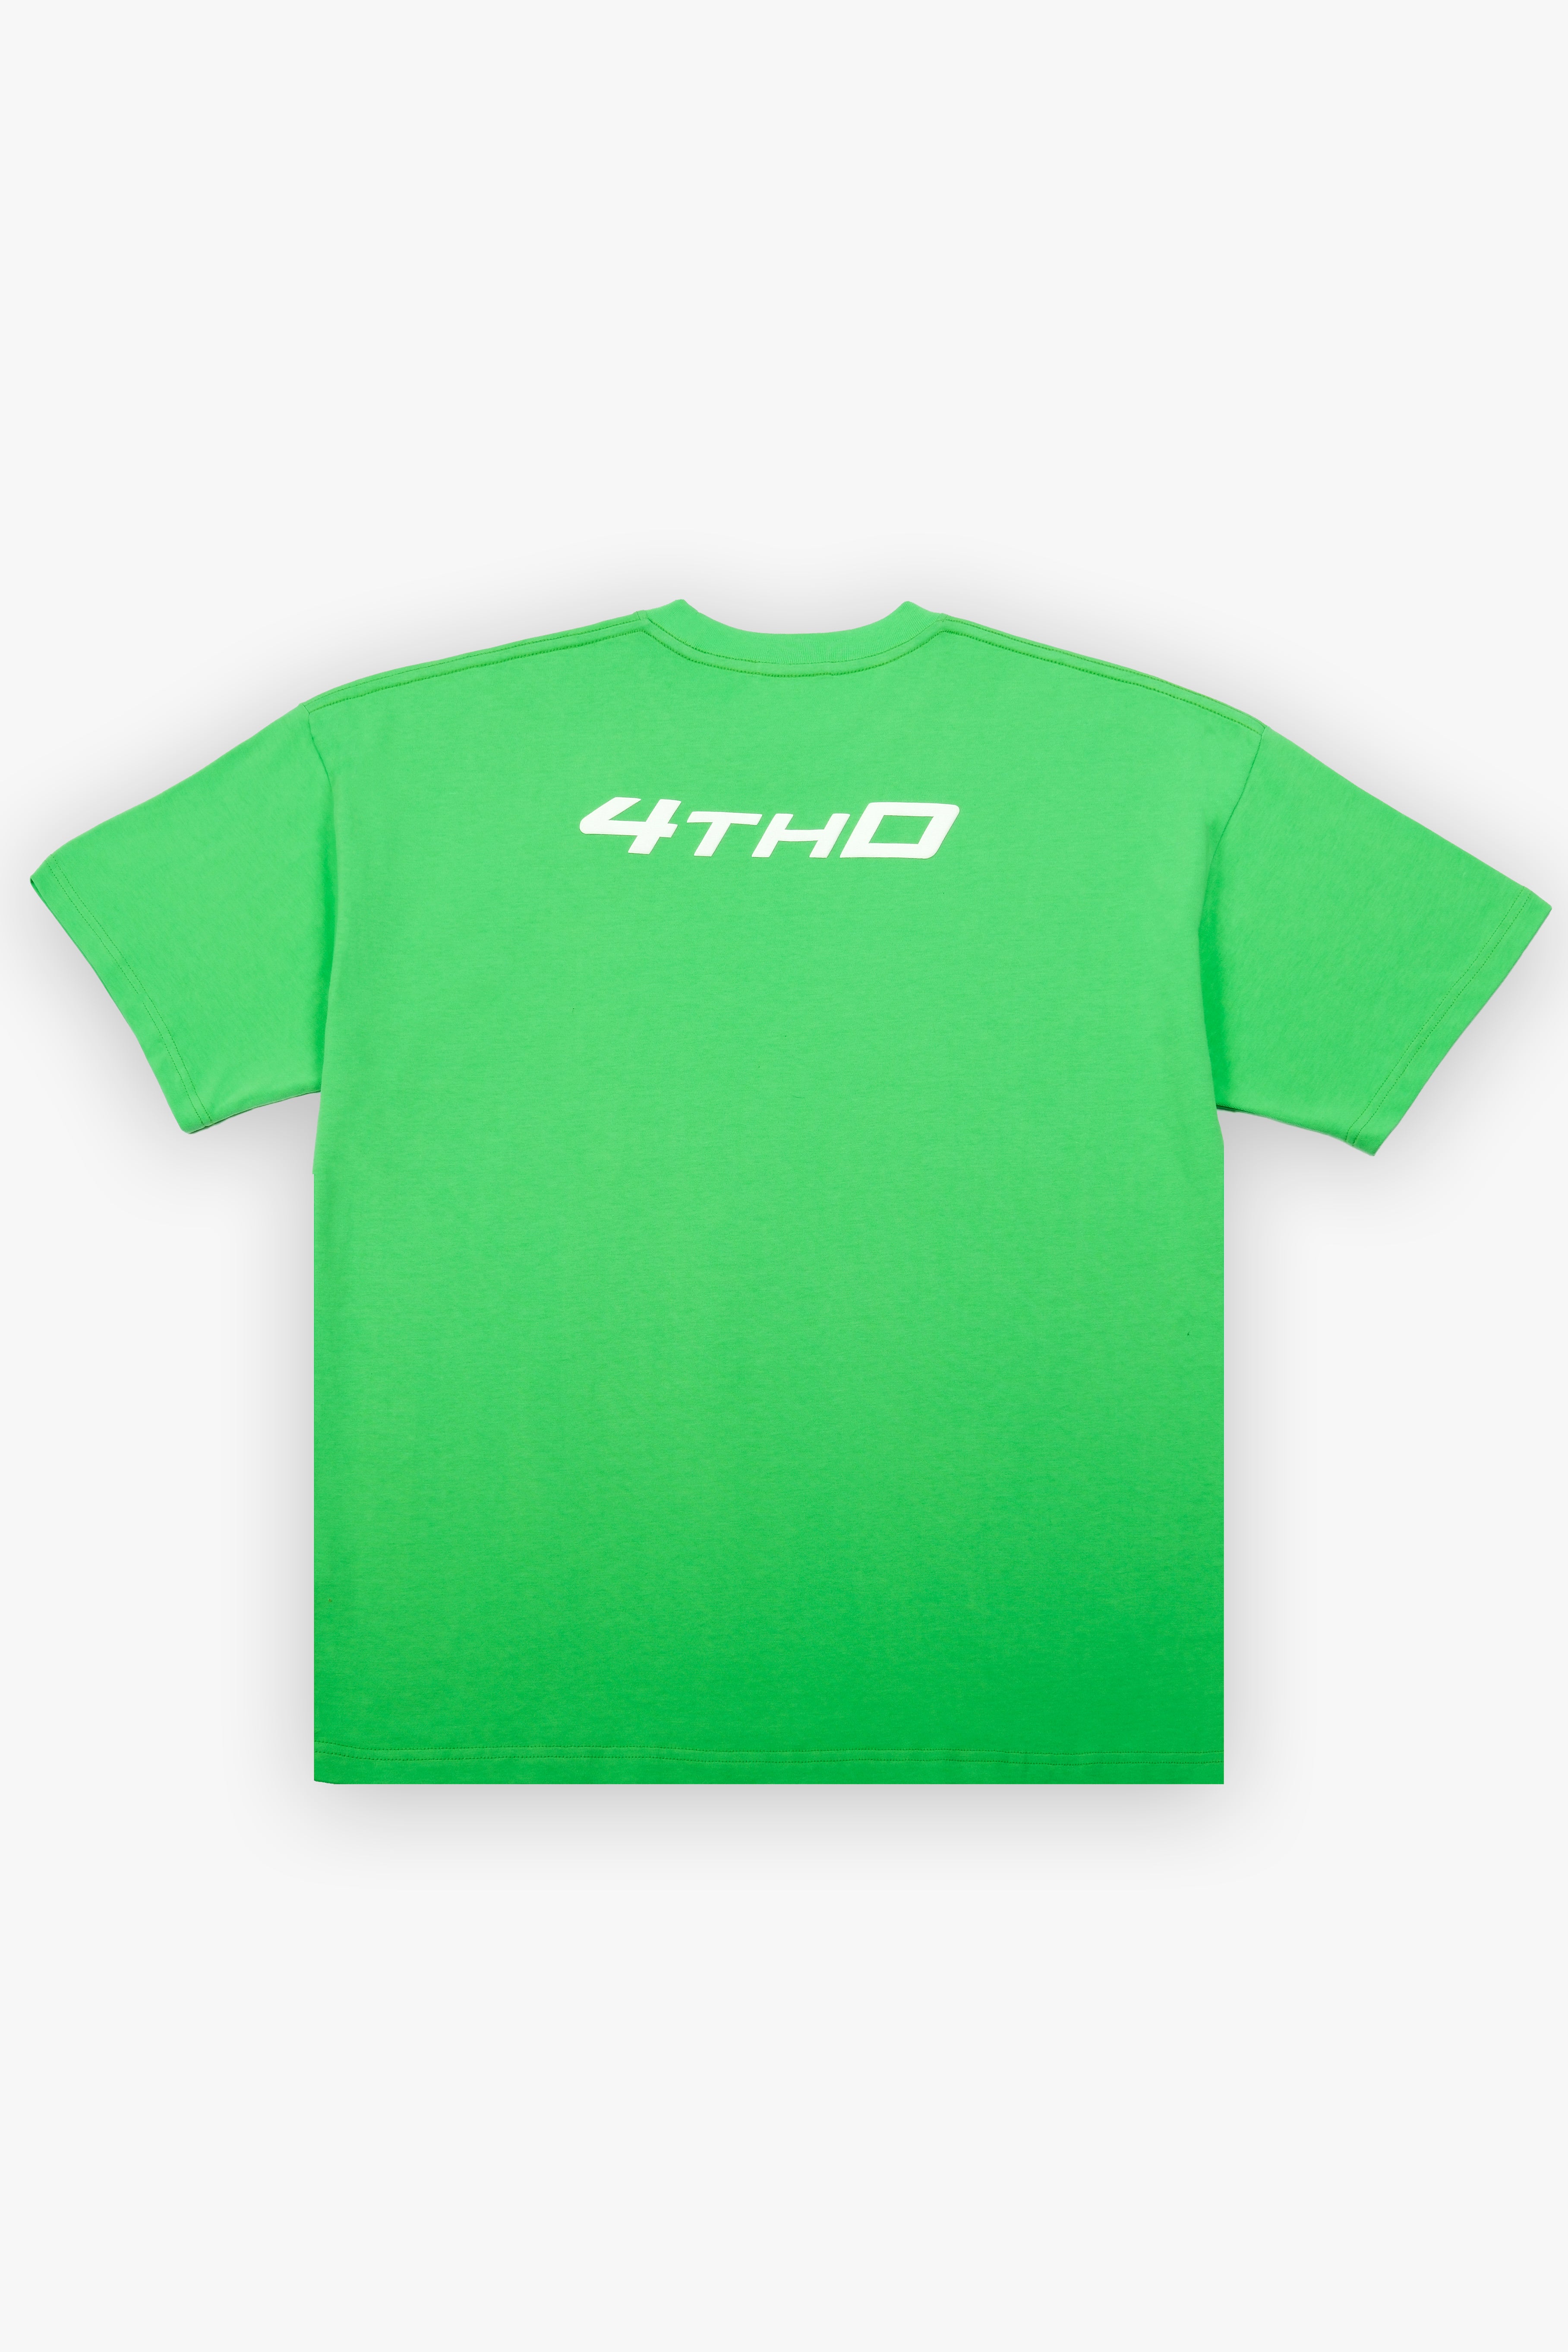 Pantone Shirt - Green